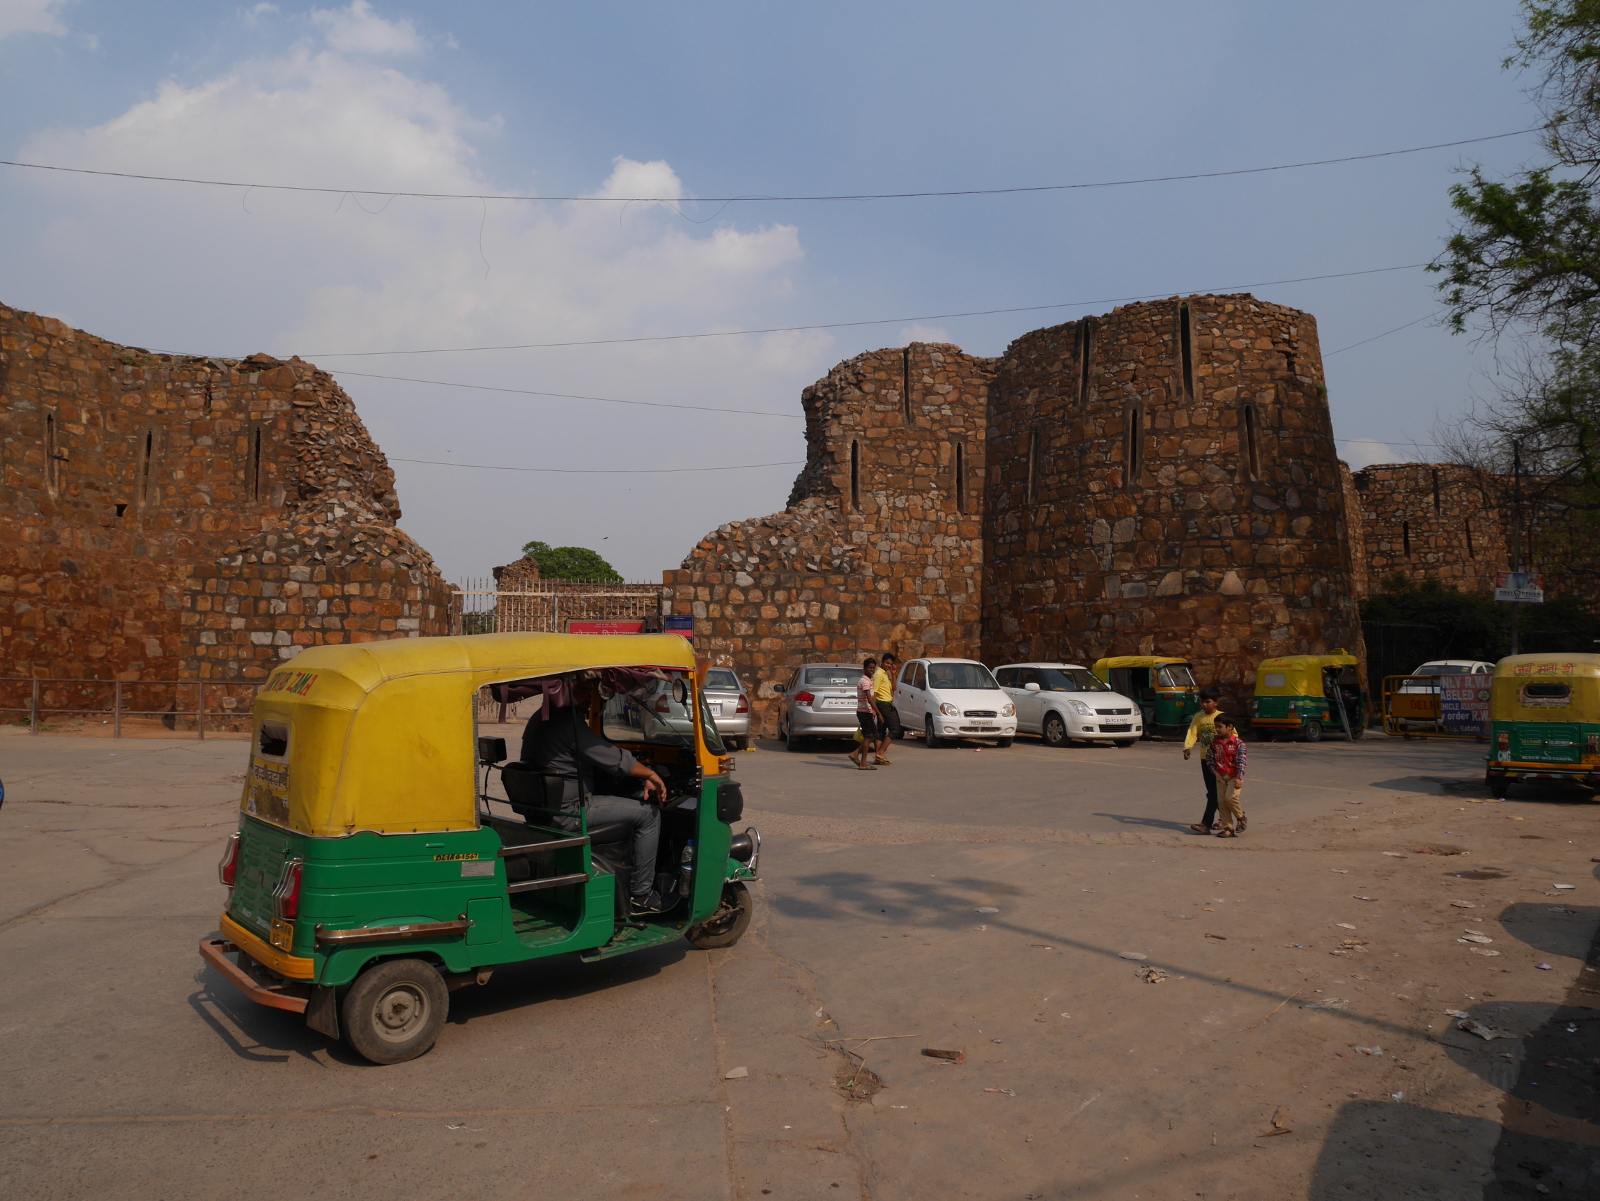 A Bajaj autorickshaw at Firoz Shah Kotla, Delhi.